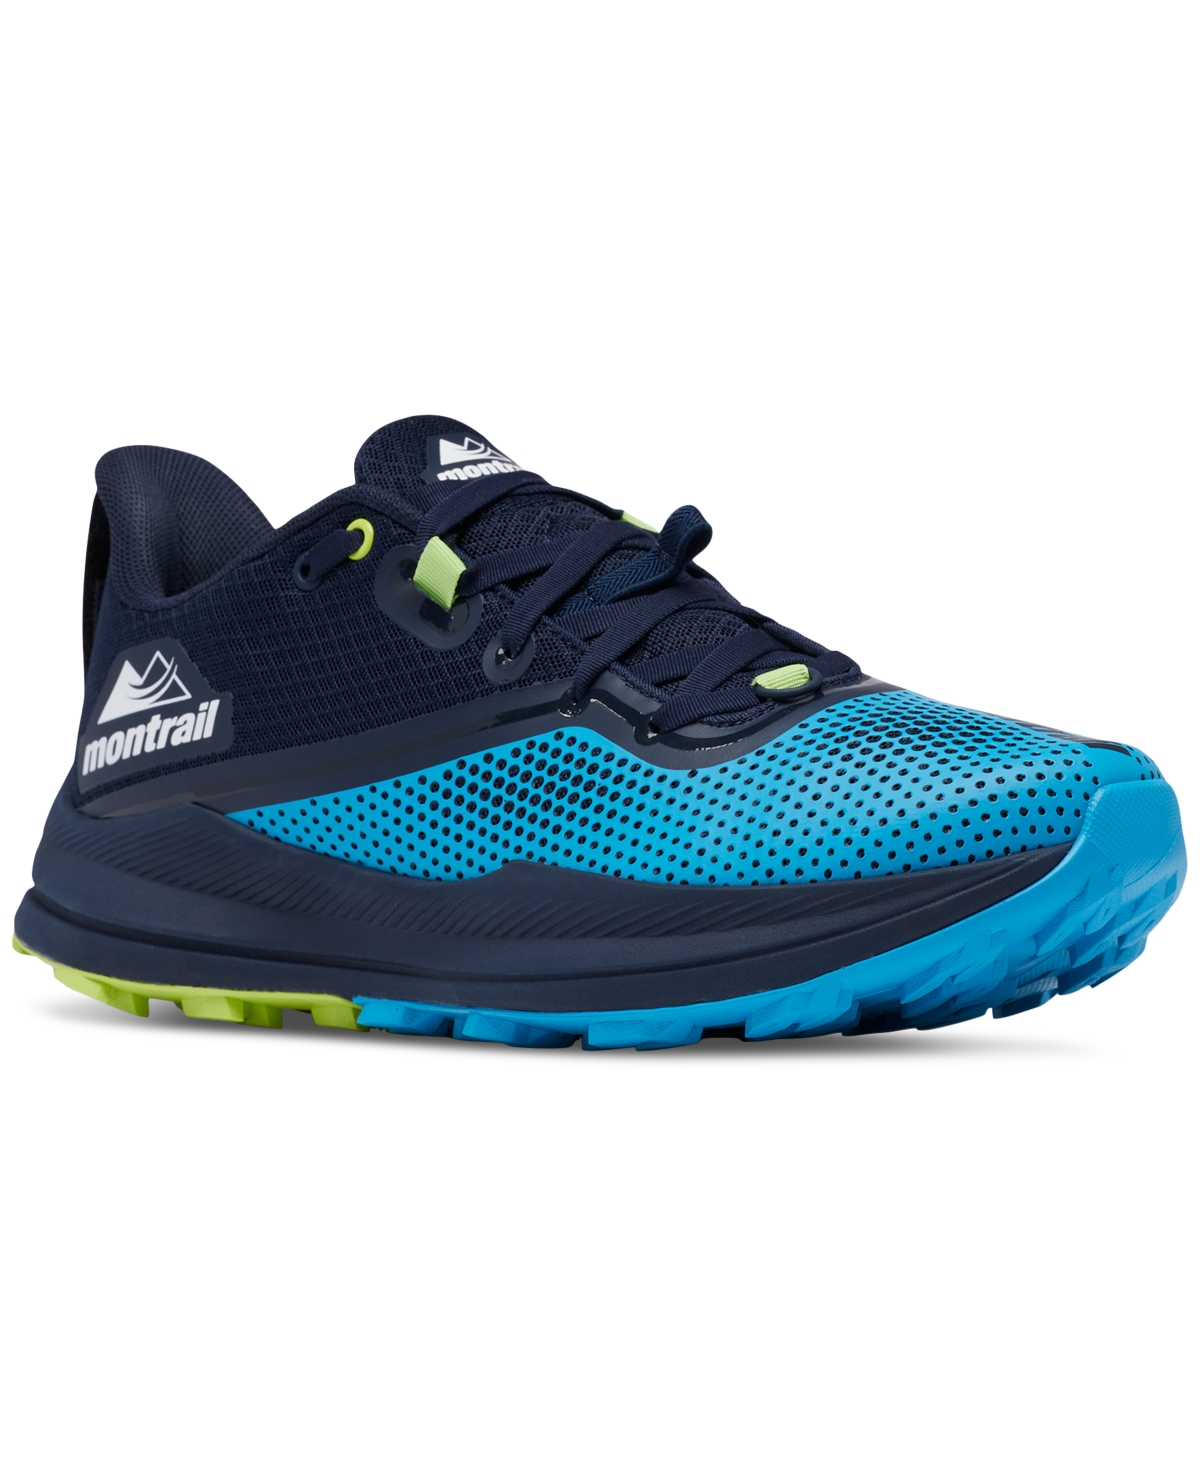 Men's Montrail Trinity Fkt Trail Running Sneakers - Ocean Blue